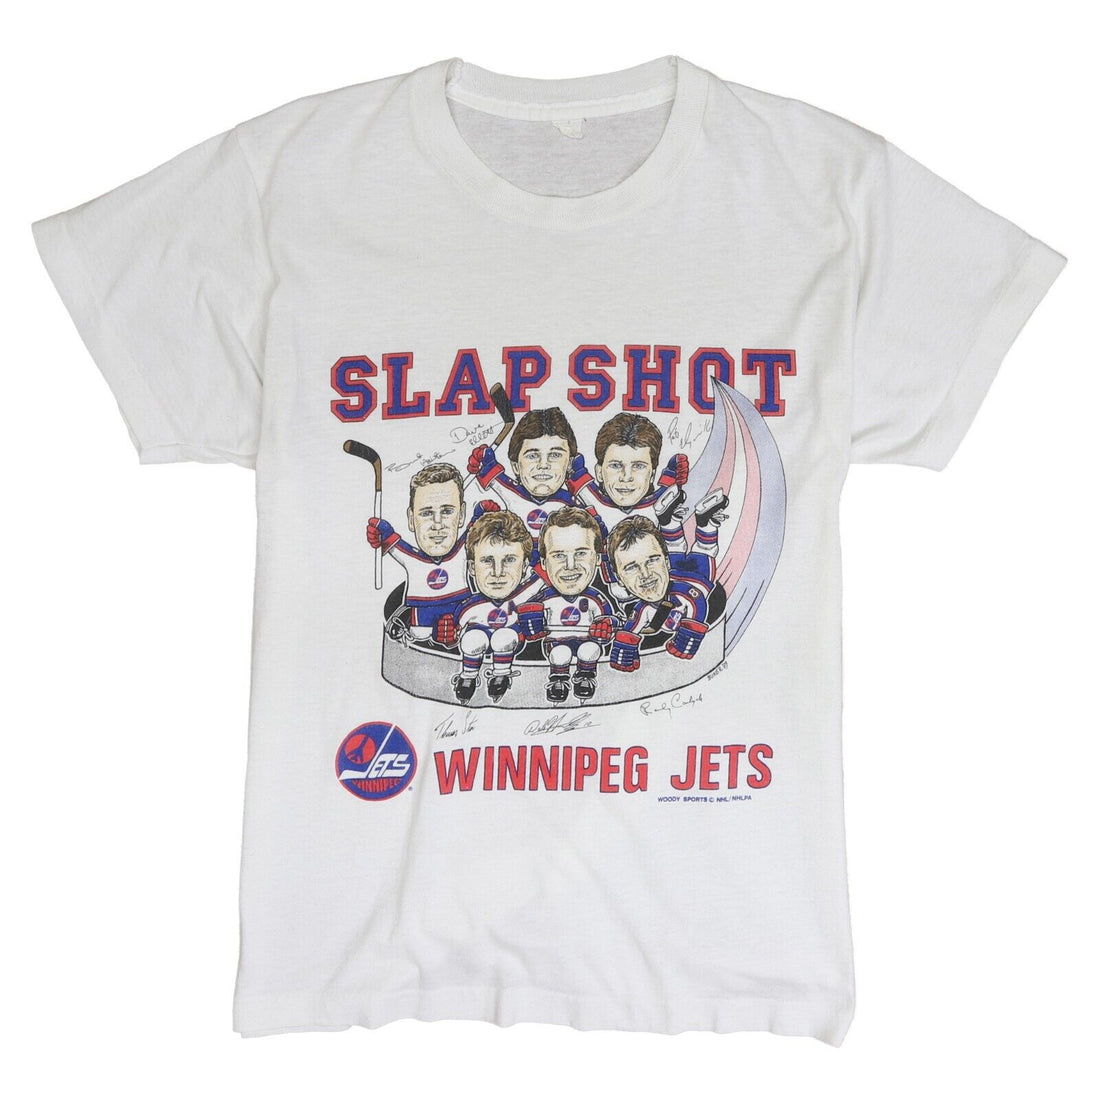 Vintage Winnipeg Jets Slap Shot Caricature T-Shirt Size Medium 1989 80s NHL